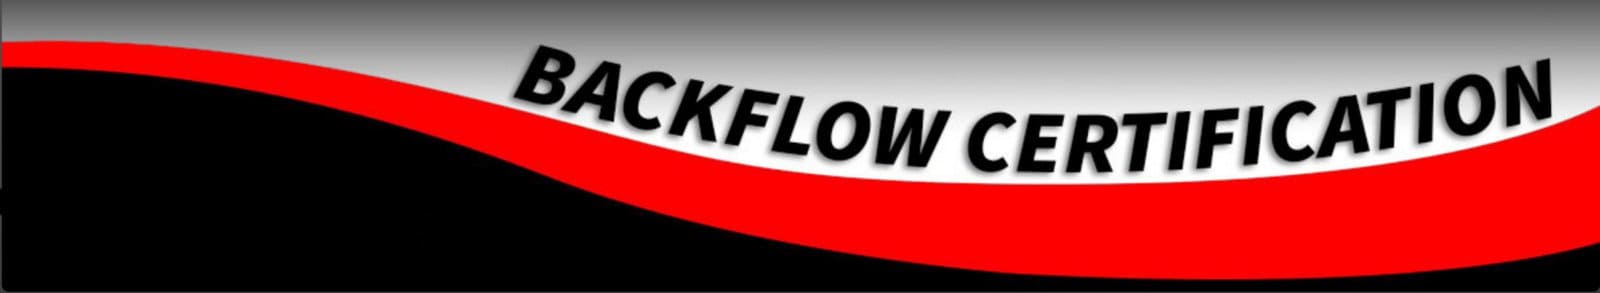 Backflow Testing Hollywood FL